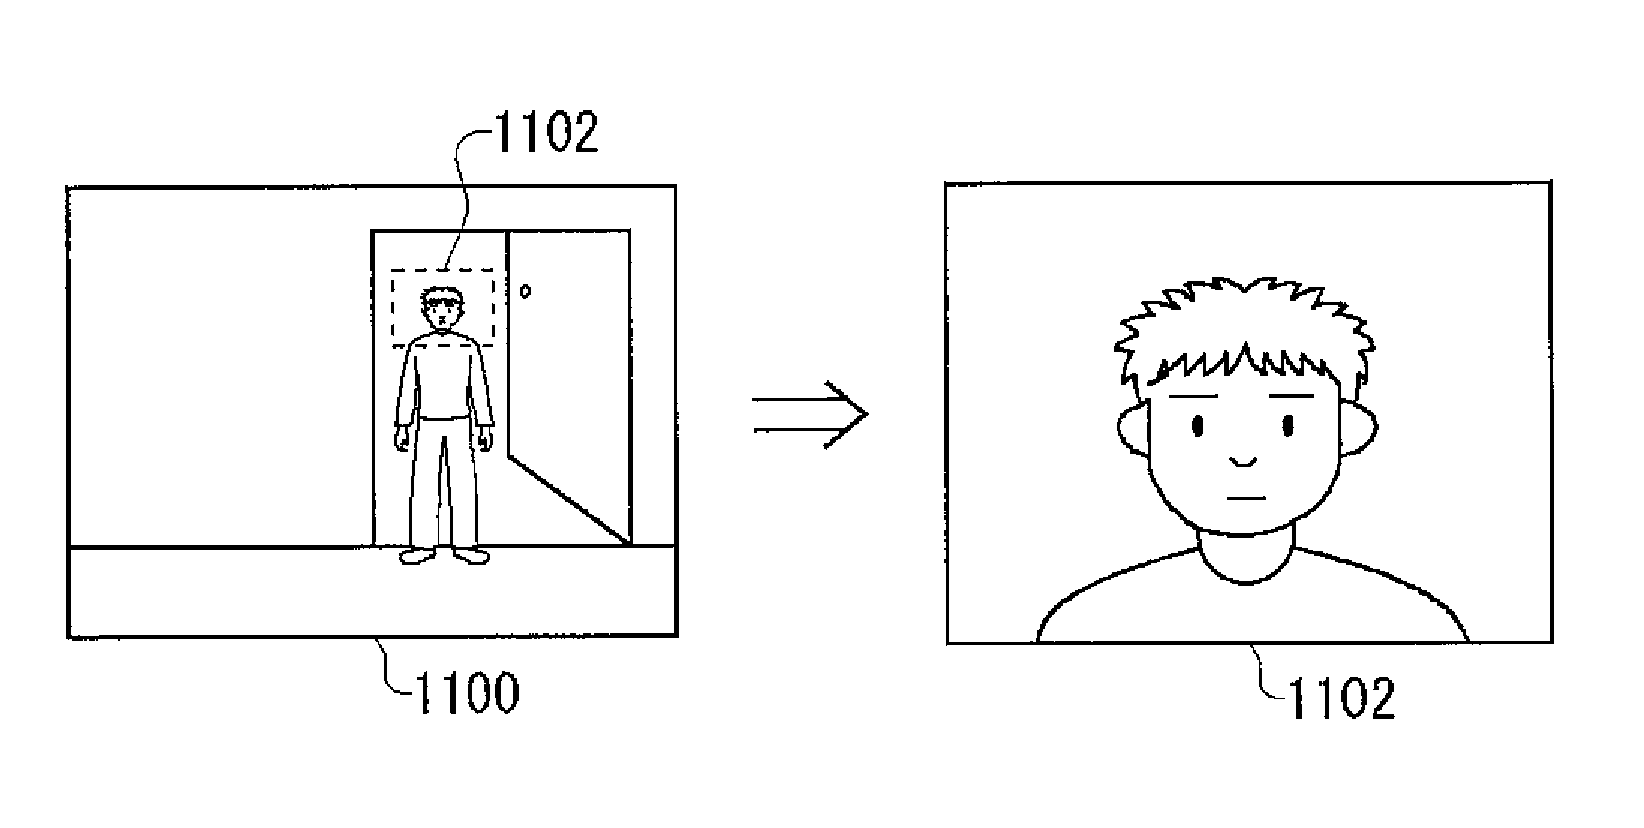 Image capturing apparatus, image capturing method, and computer program product